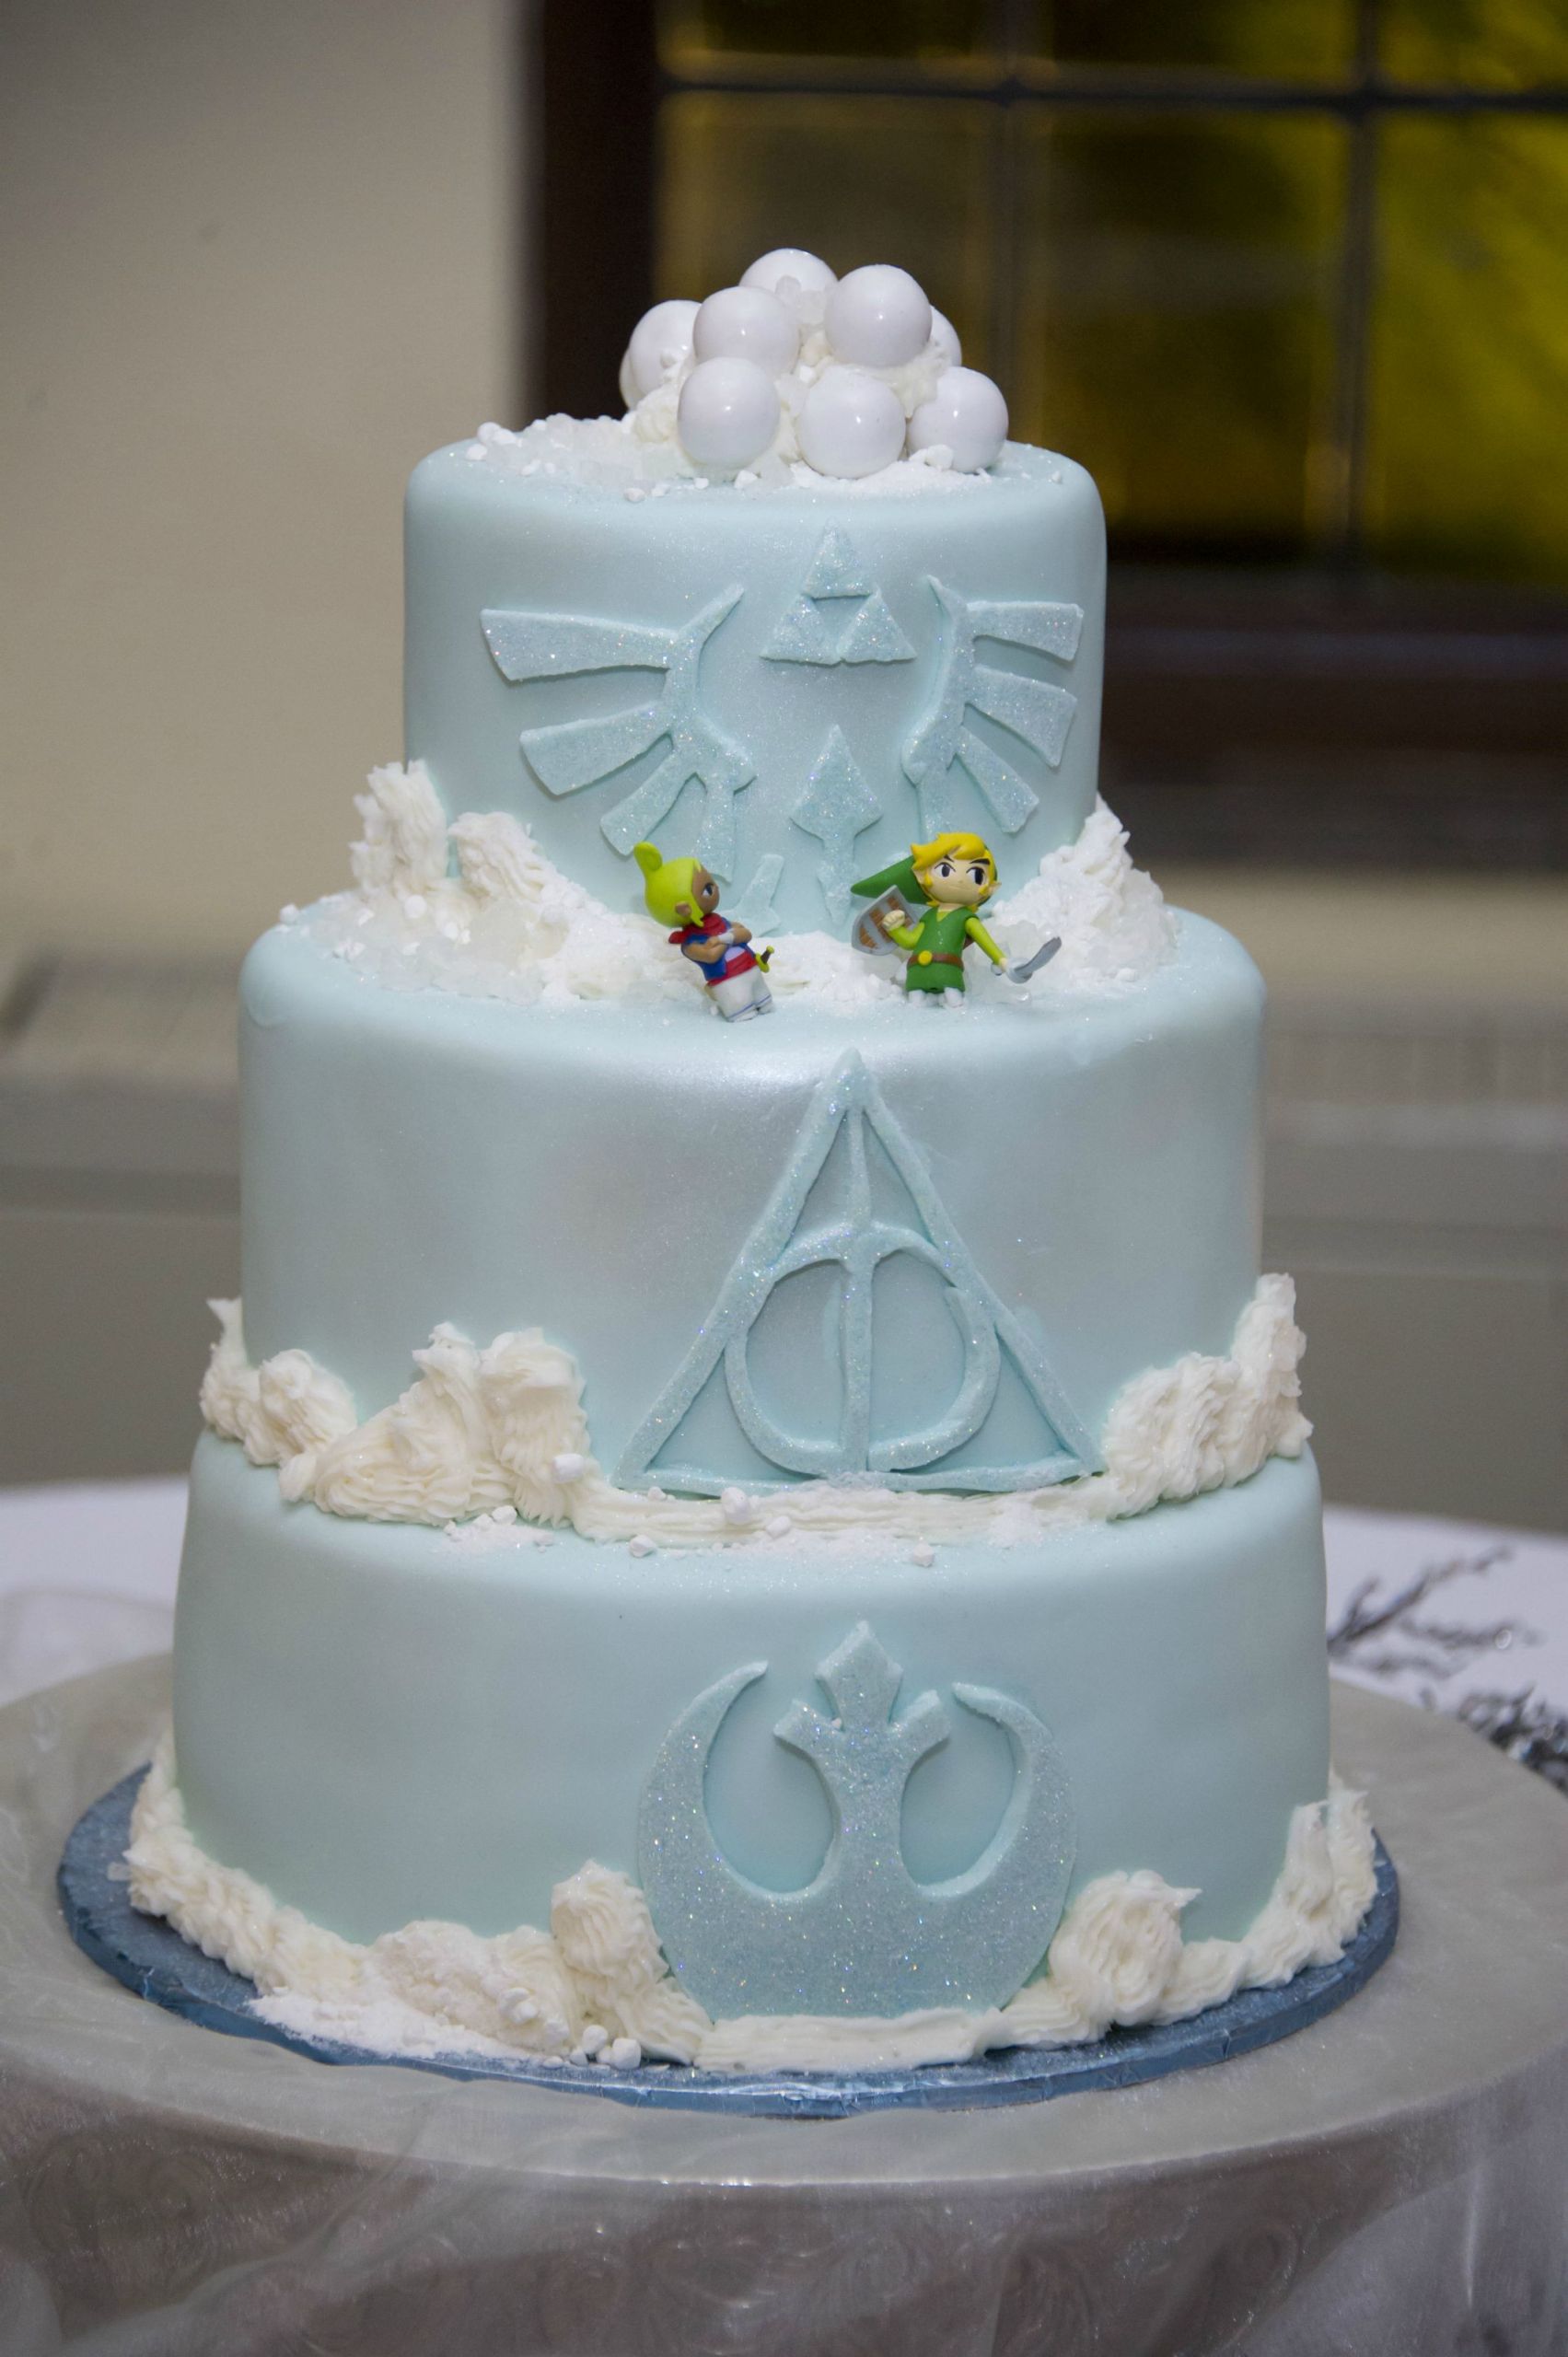 Zelda Themed Wedding
 8bit Zelda themed groom s "cake" my wife had made for our